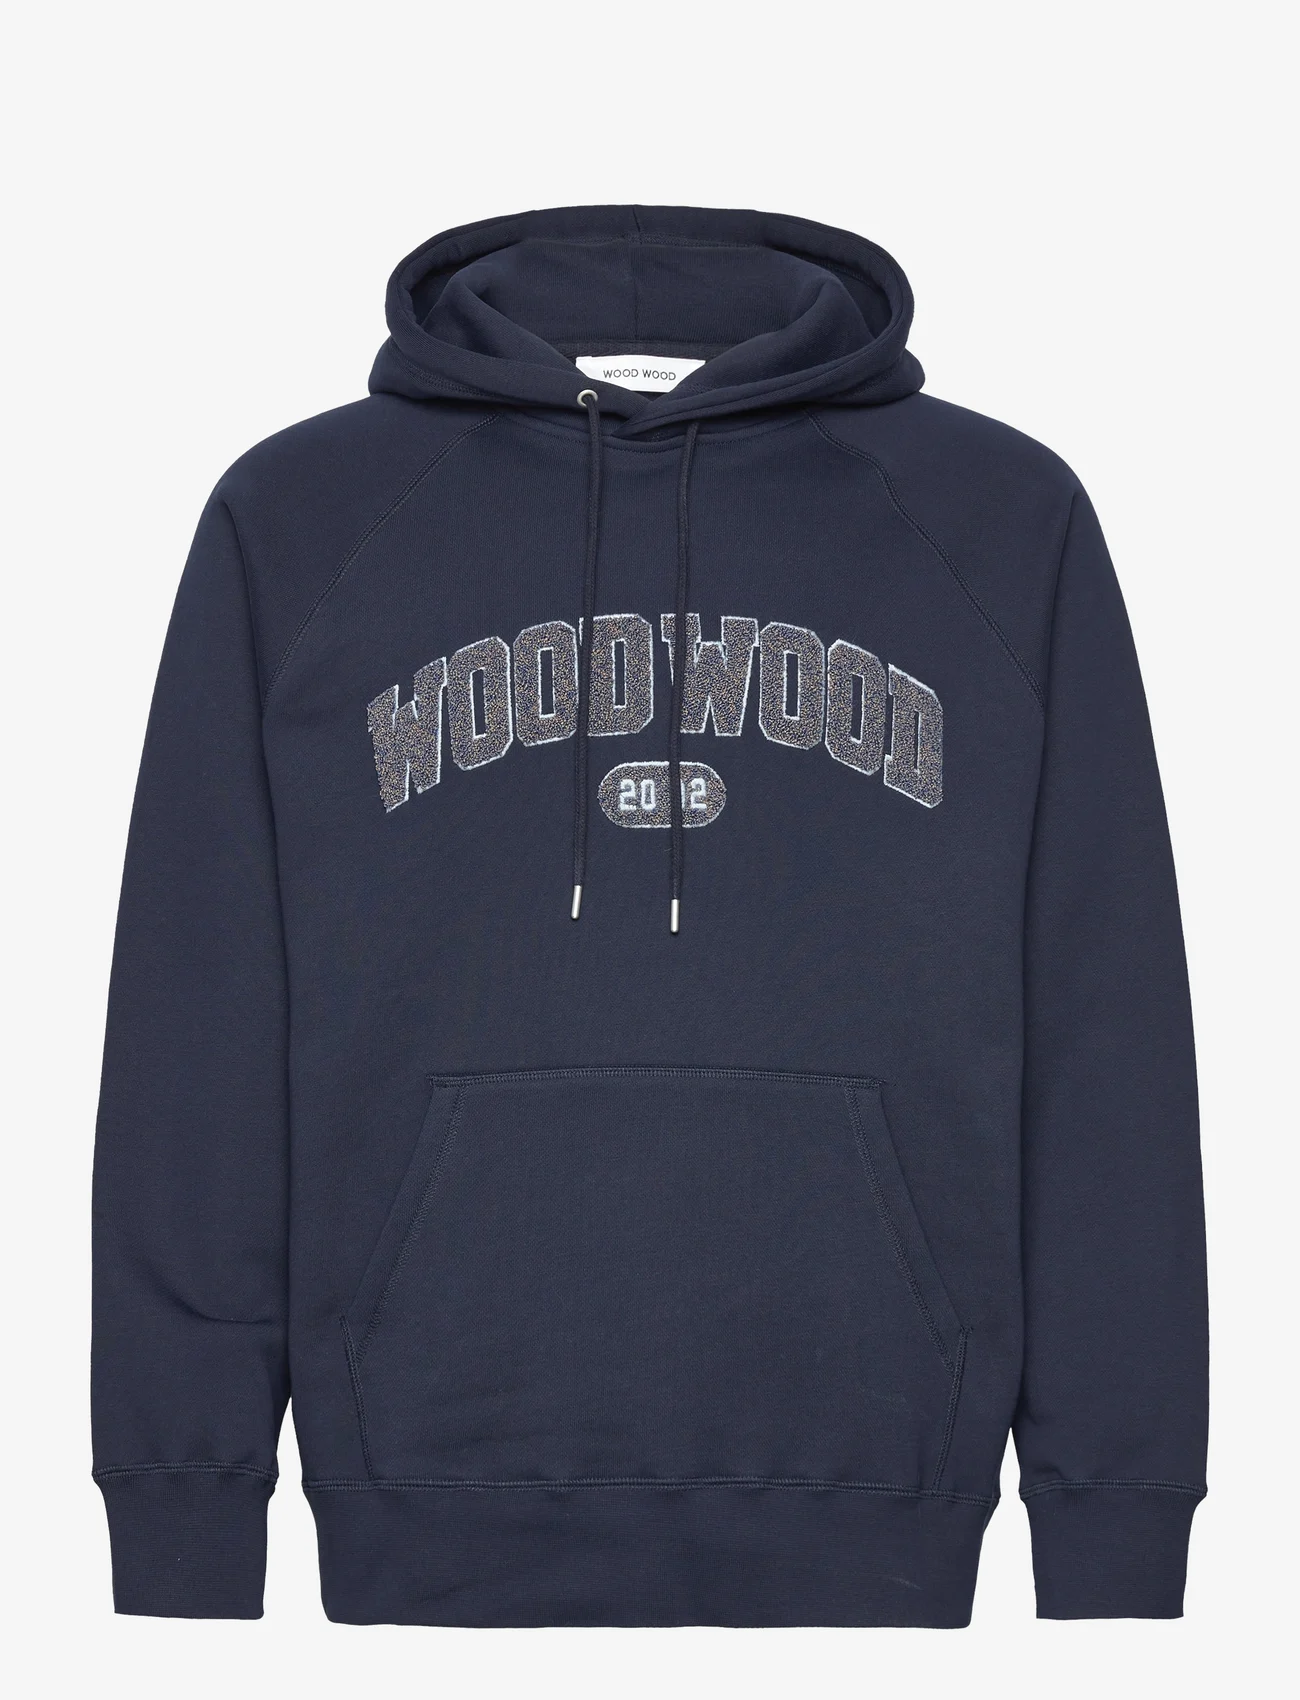 Wood Wood - Fred IVY hoodie - bluzy z kapturem - navy - 0